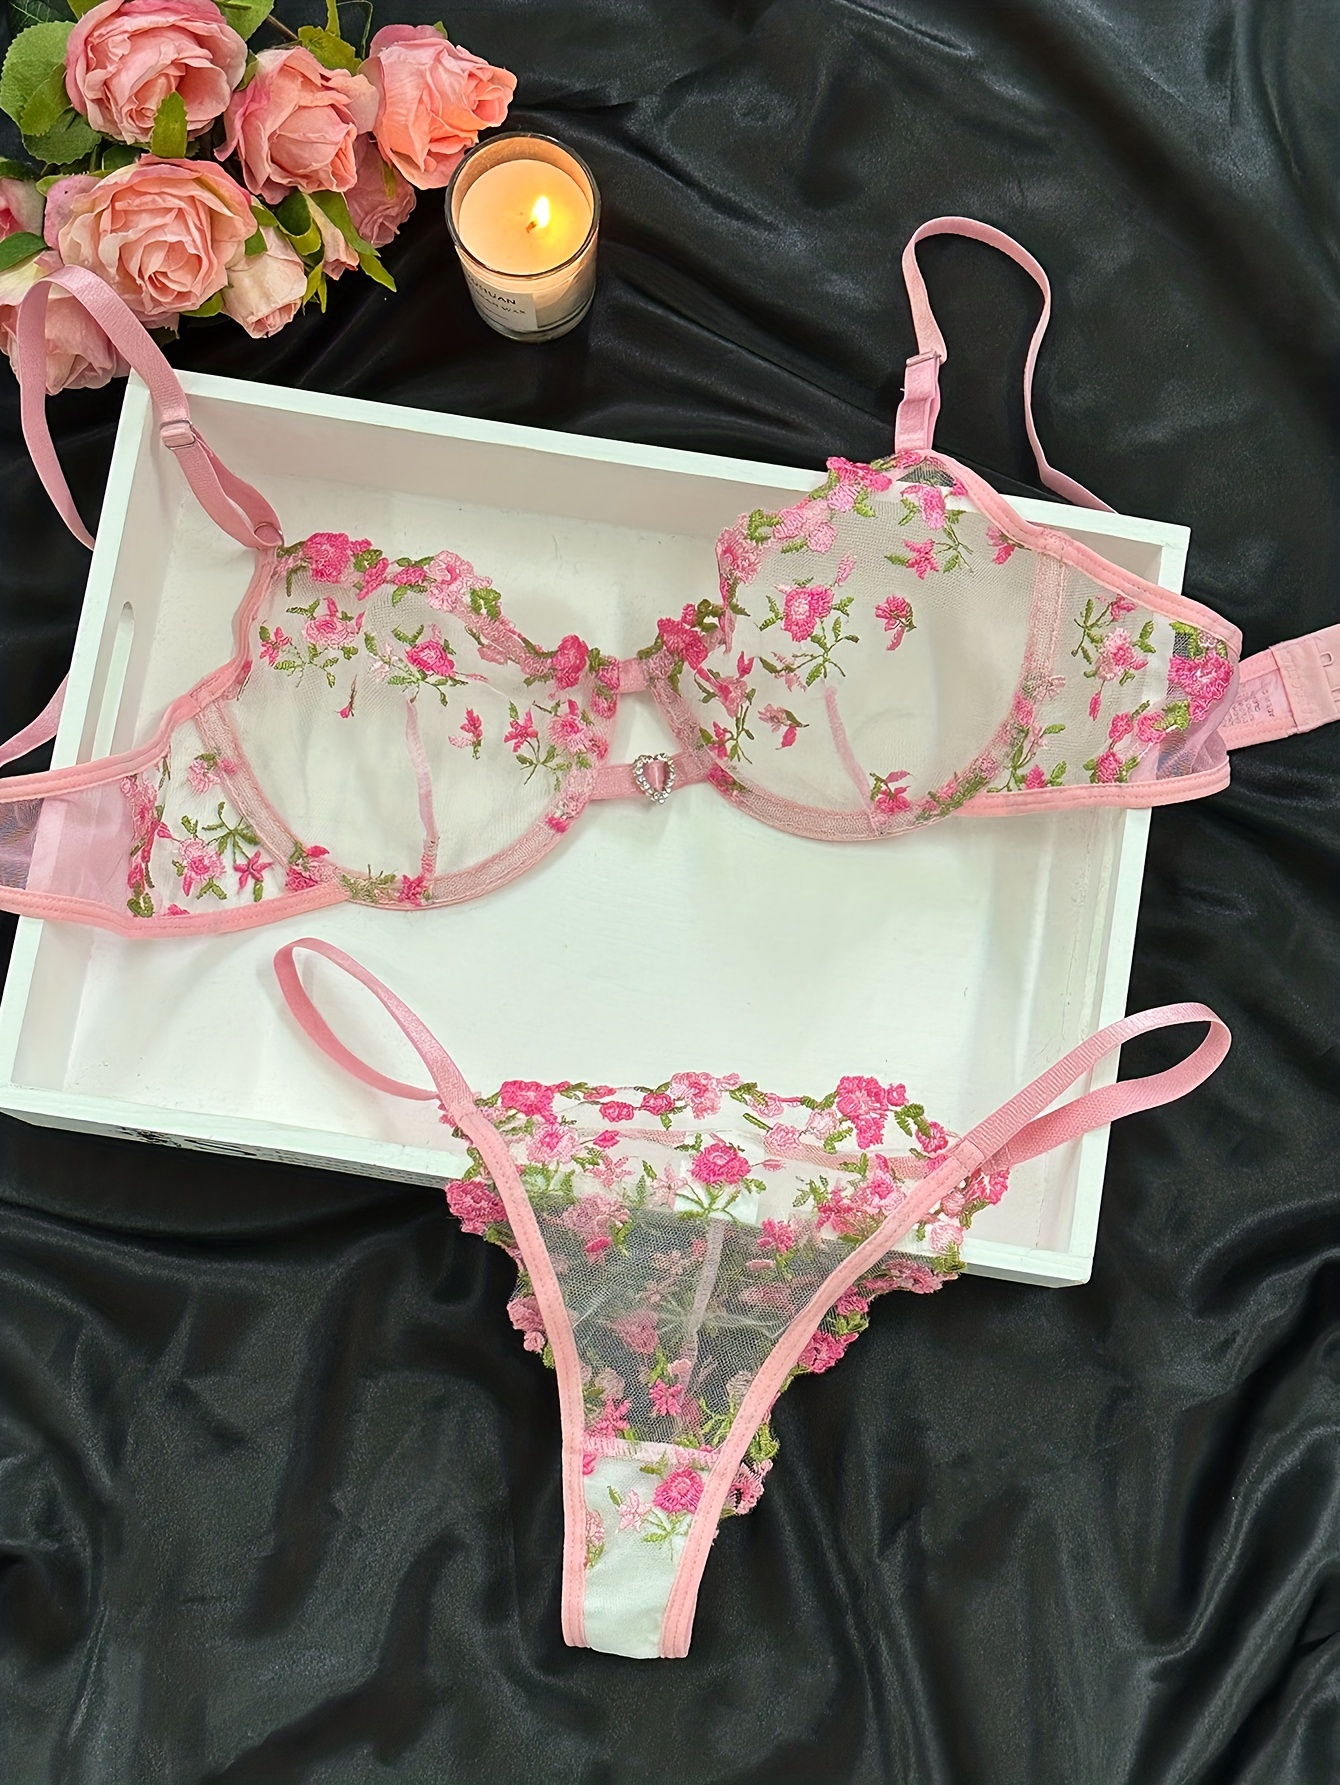 Pink Bra And Panty Set - Shop on Pinterest